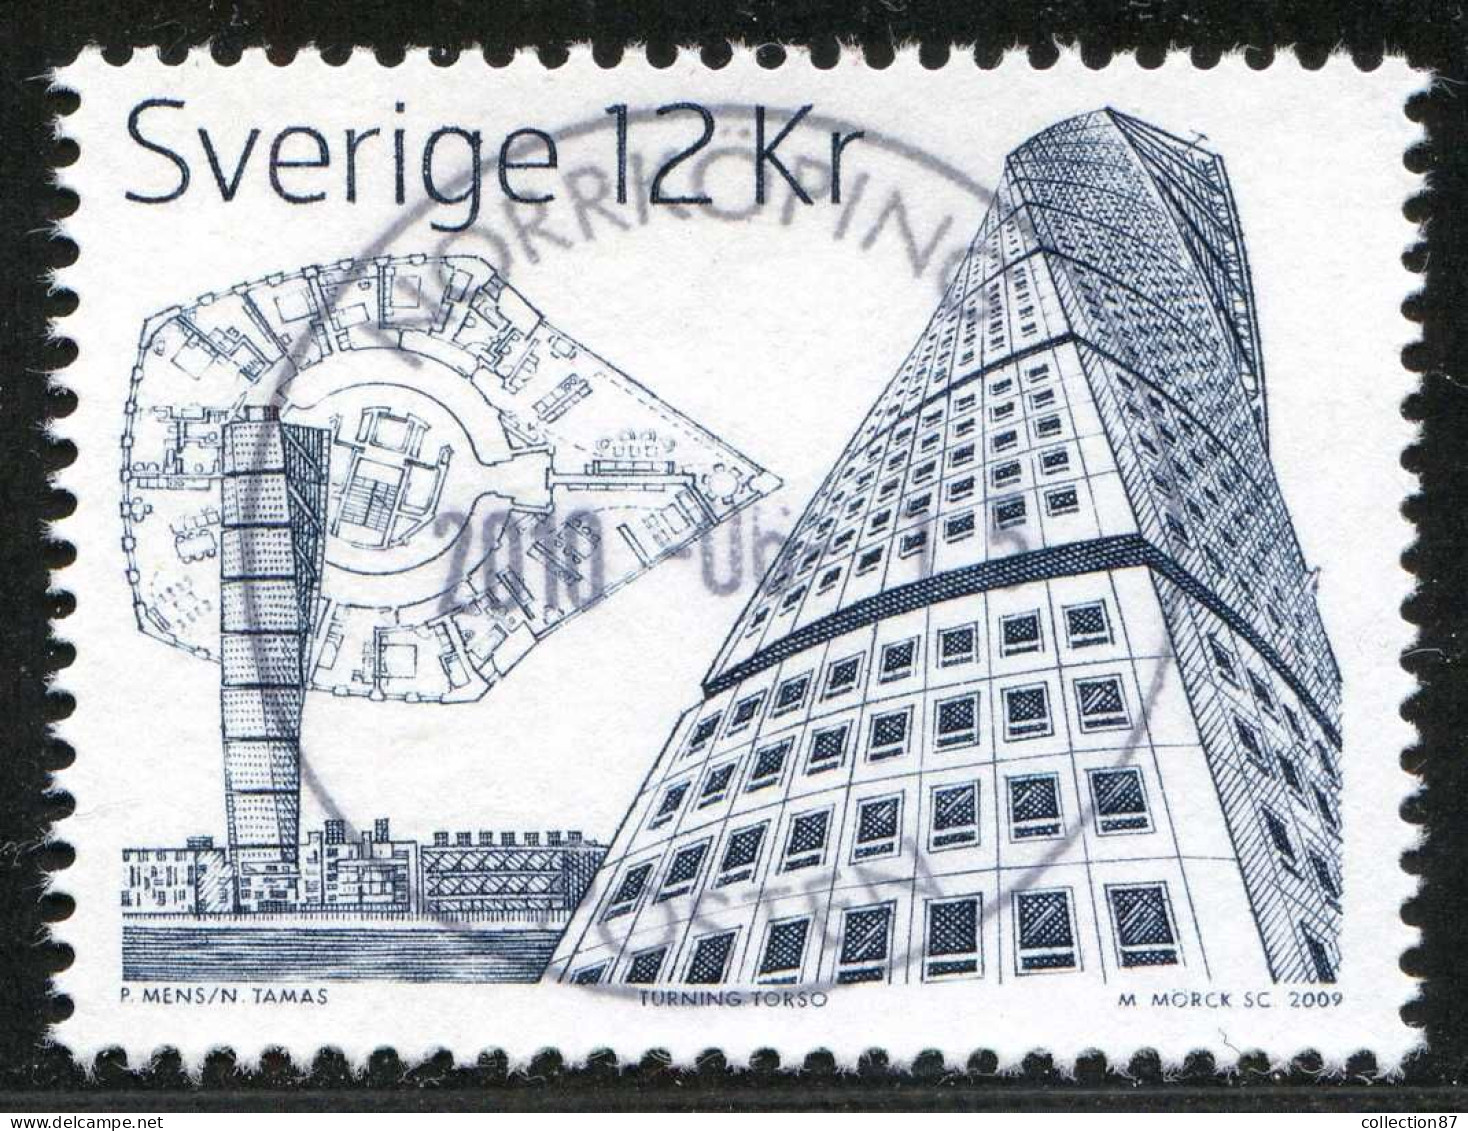 Réf 77 < SUEDE < Yvert N° 2687 Ø Dent 4 Cotés < Année 2009 Used < SWEDEN < Architecture < Constructions Suédoises - Used Stamps